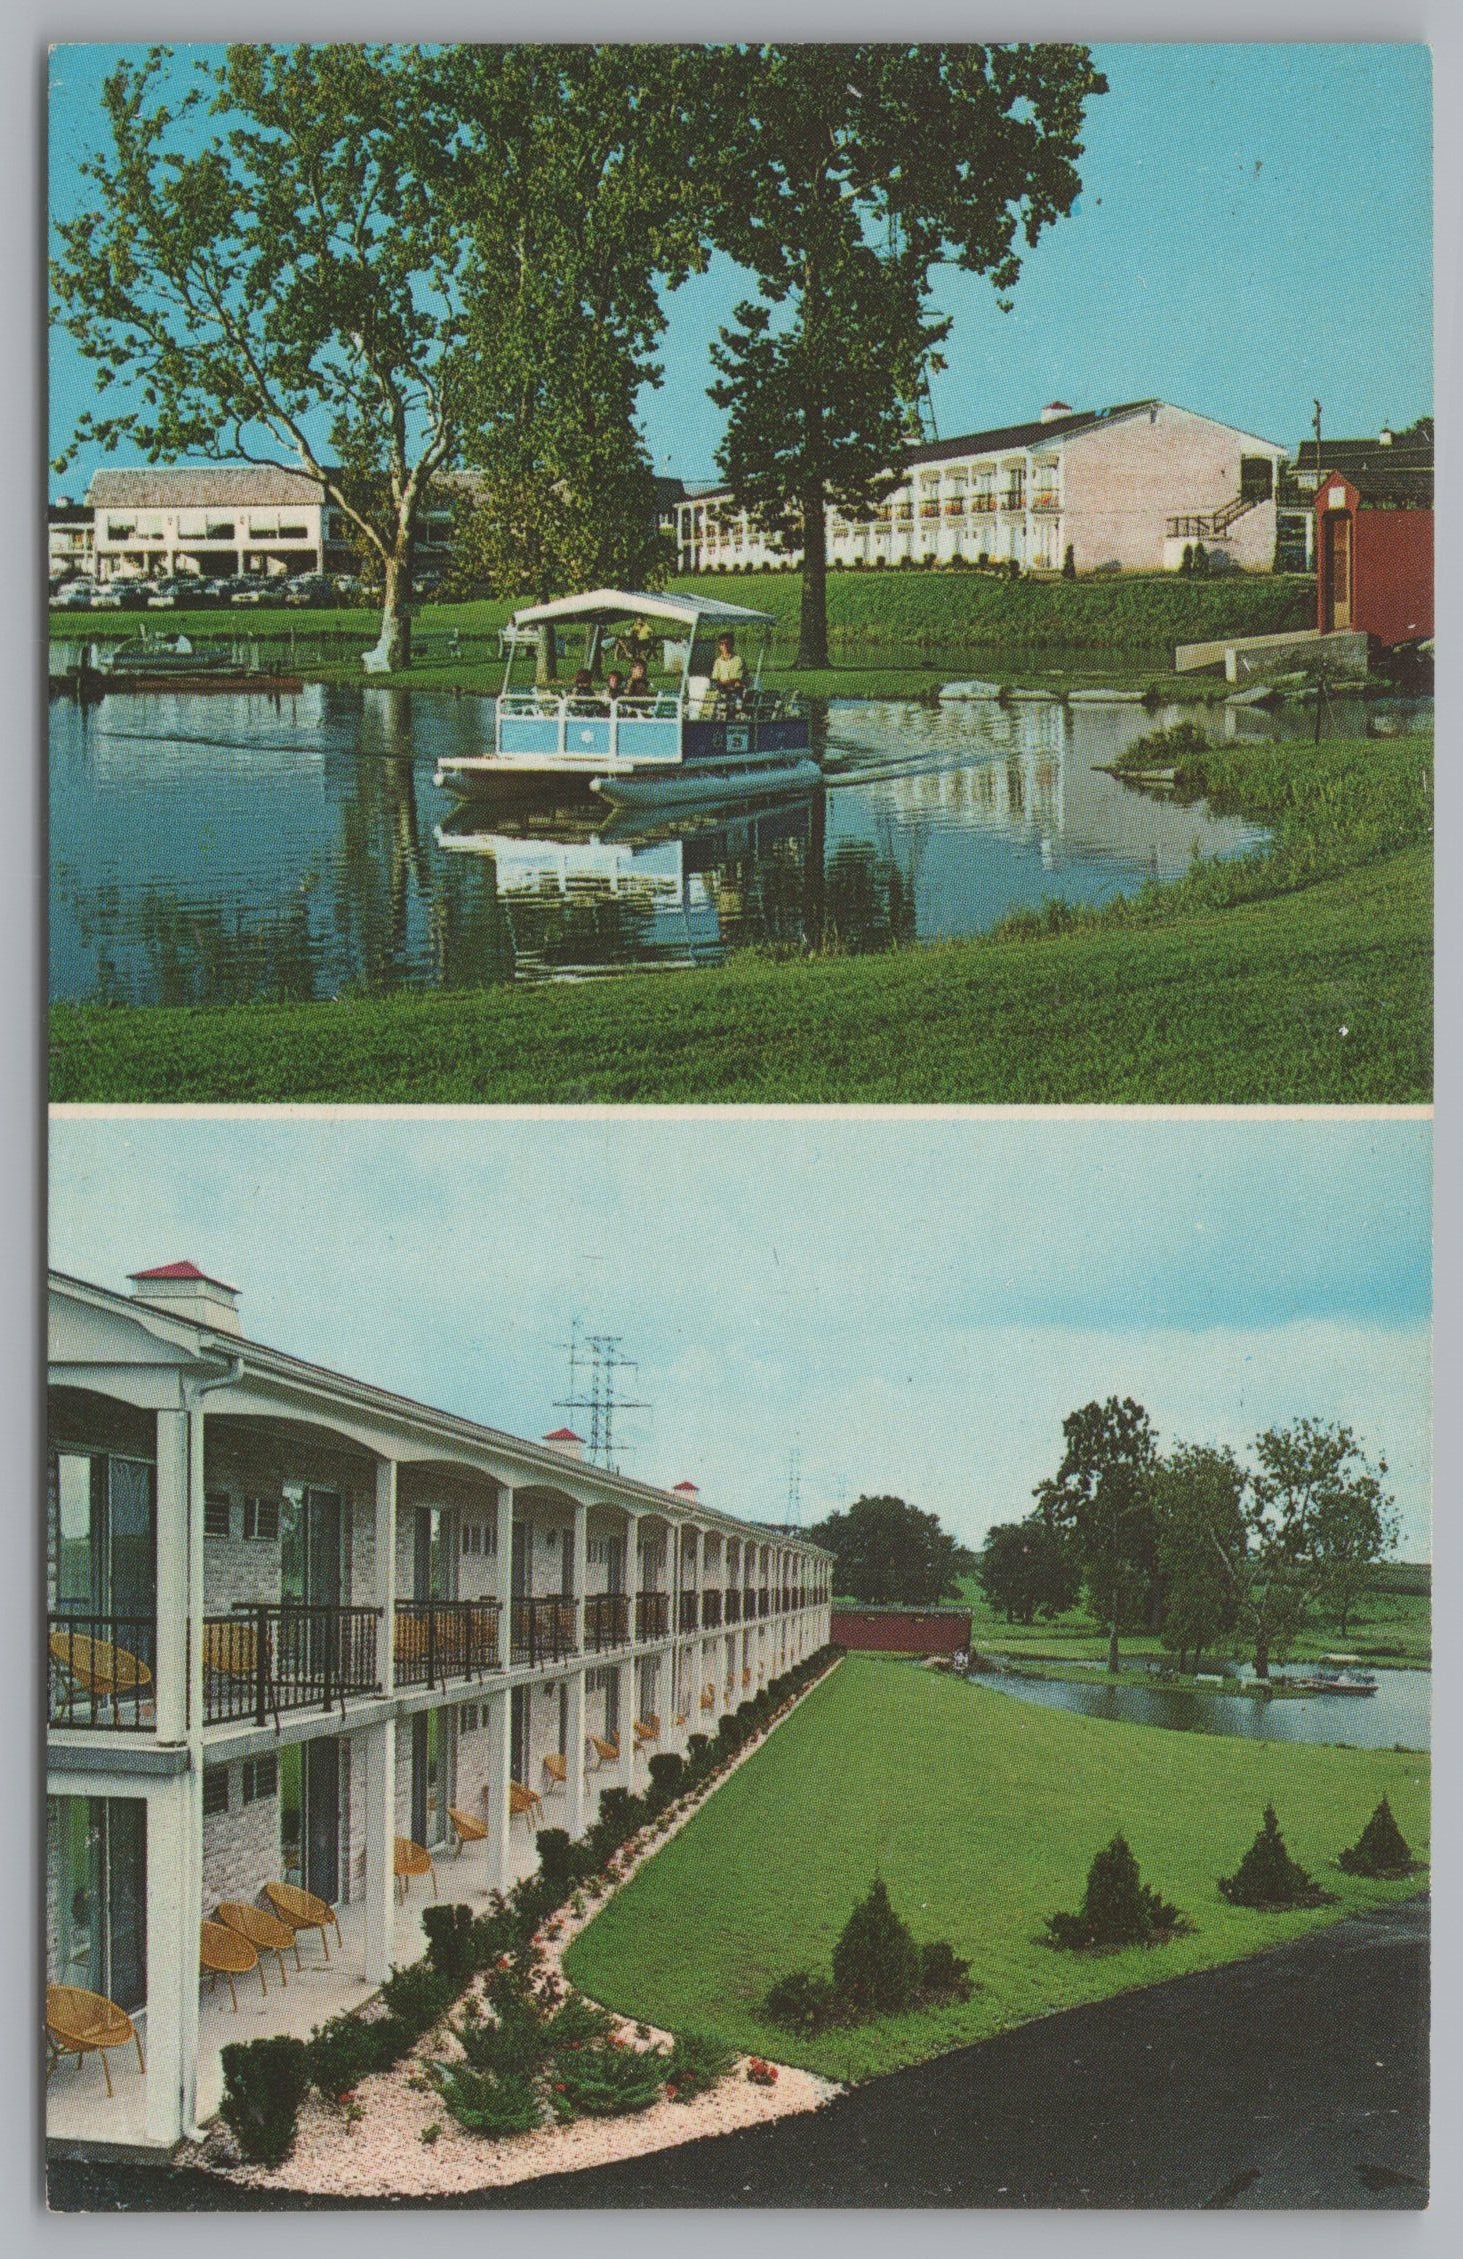 Willow Valley Motor Inn, Vintage Post Card.